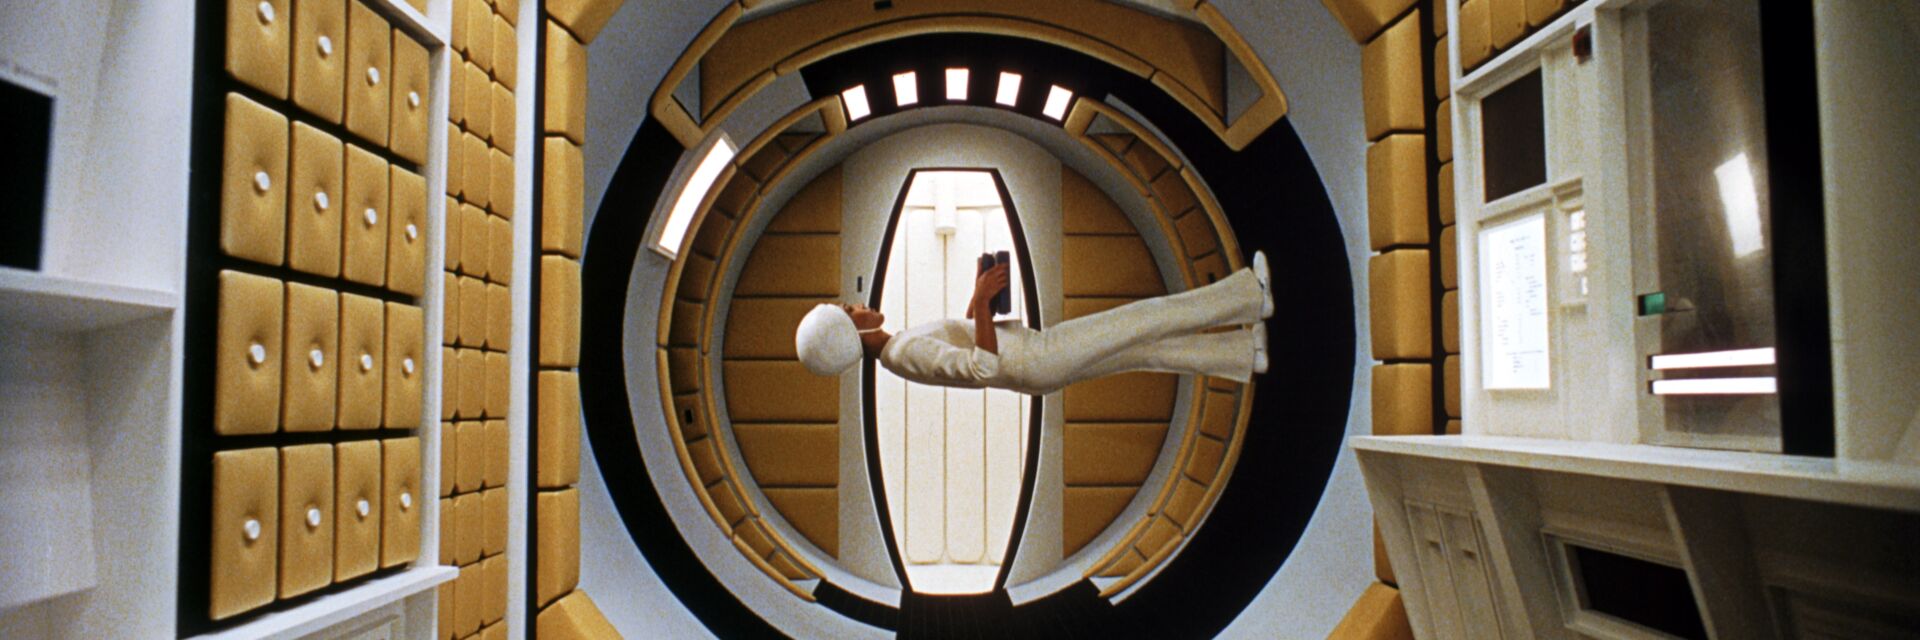 2001: A Space Odyssey (1968) – a 70mm presentation